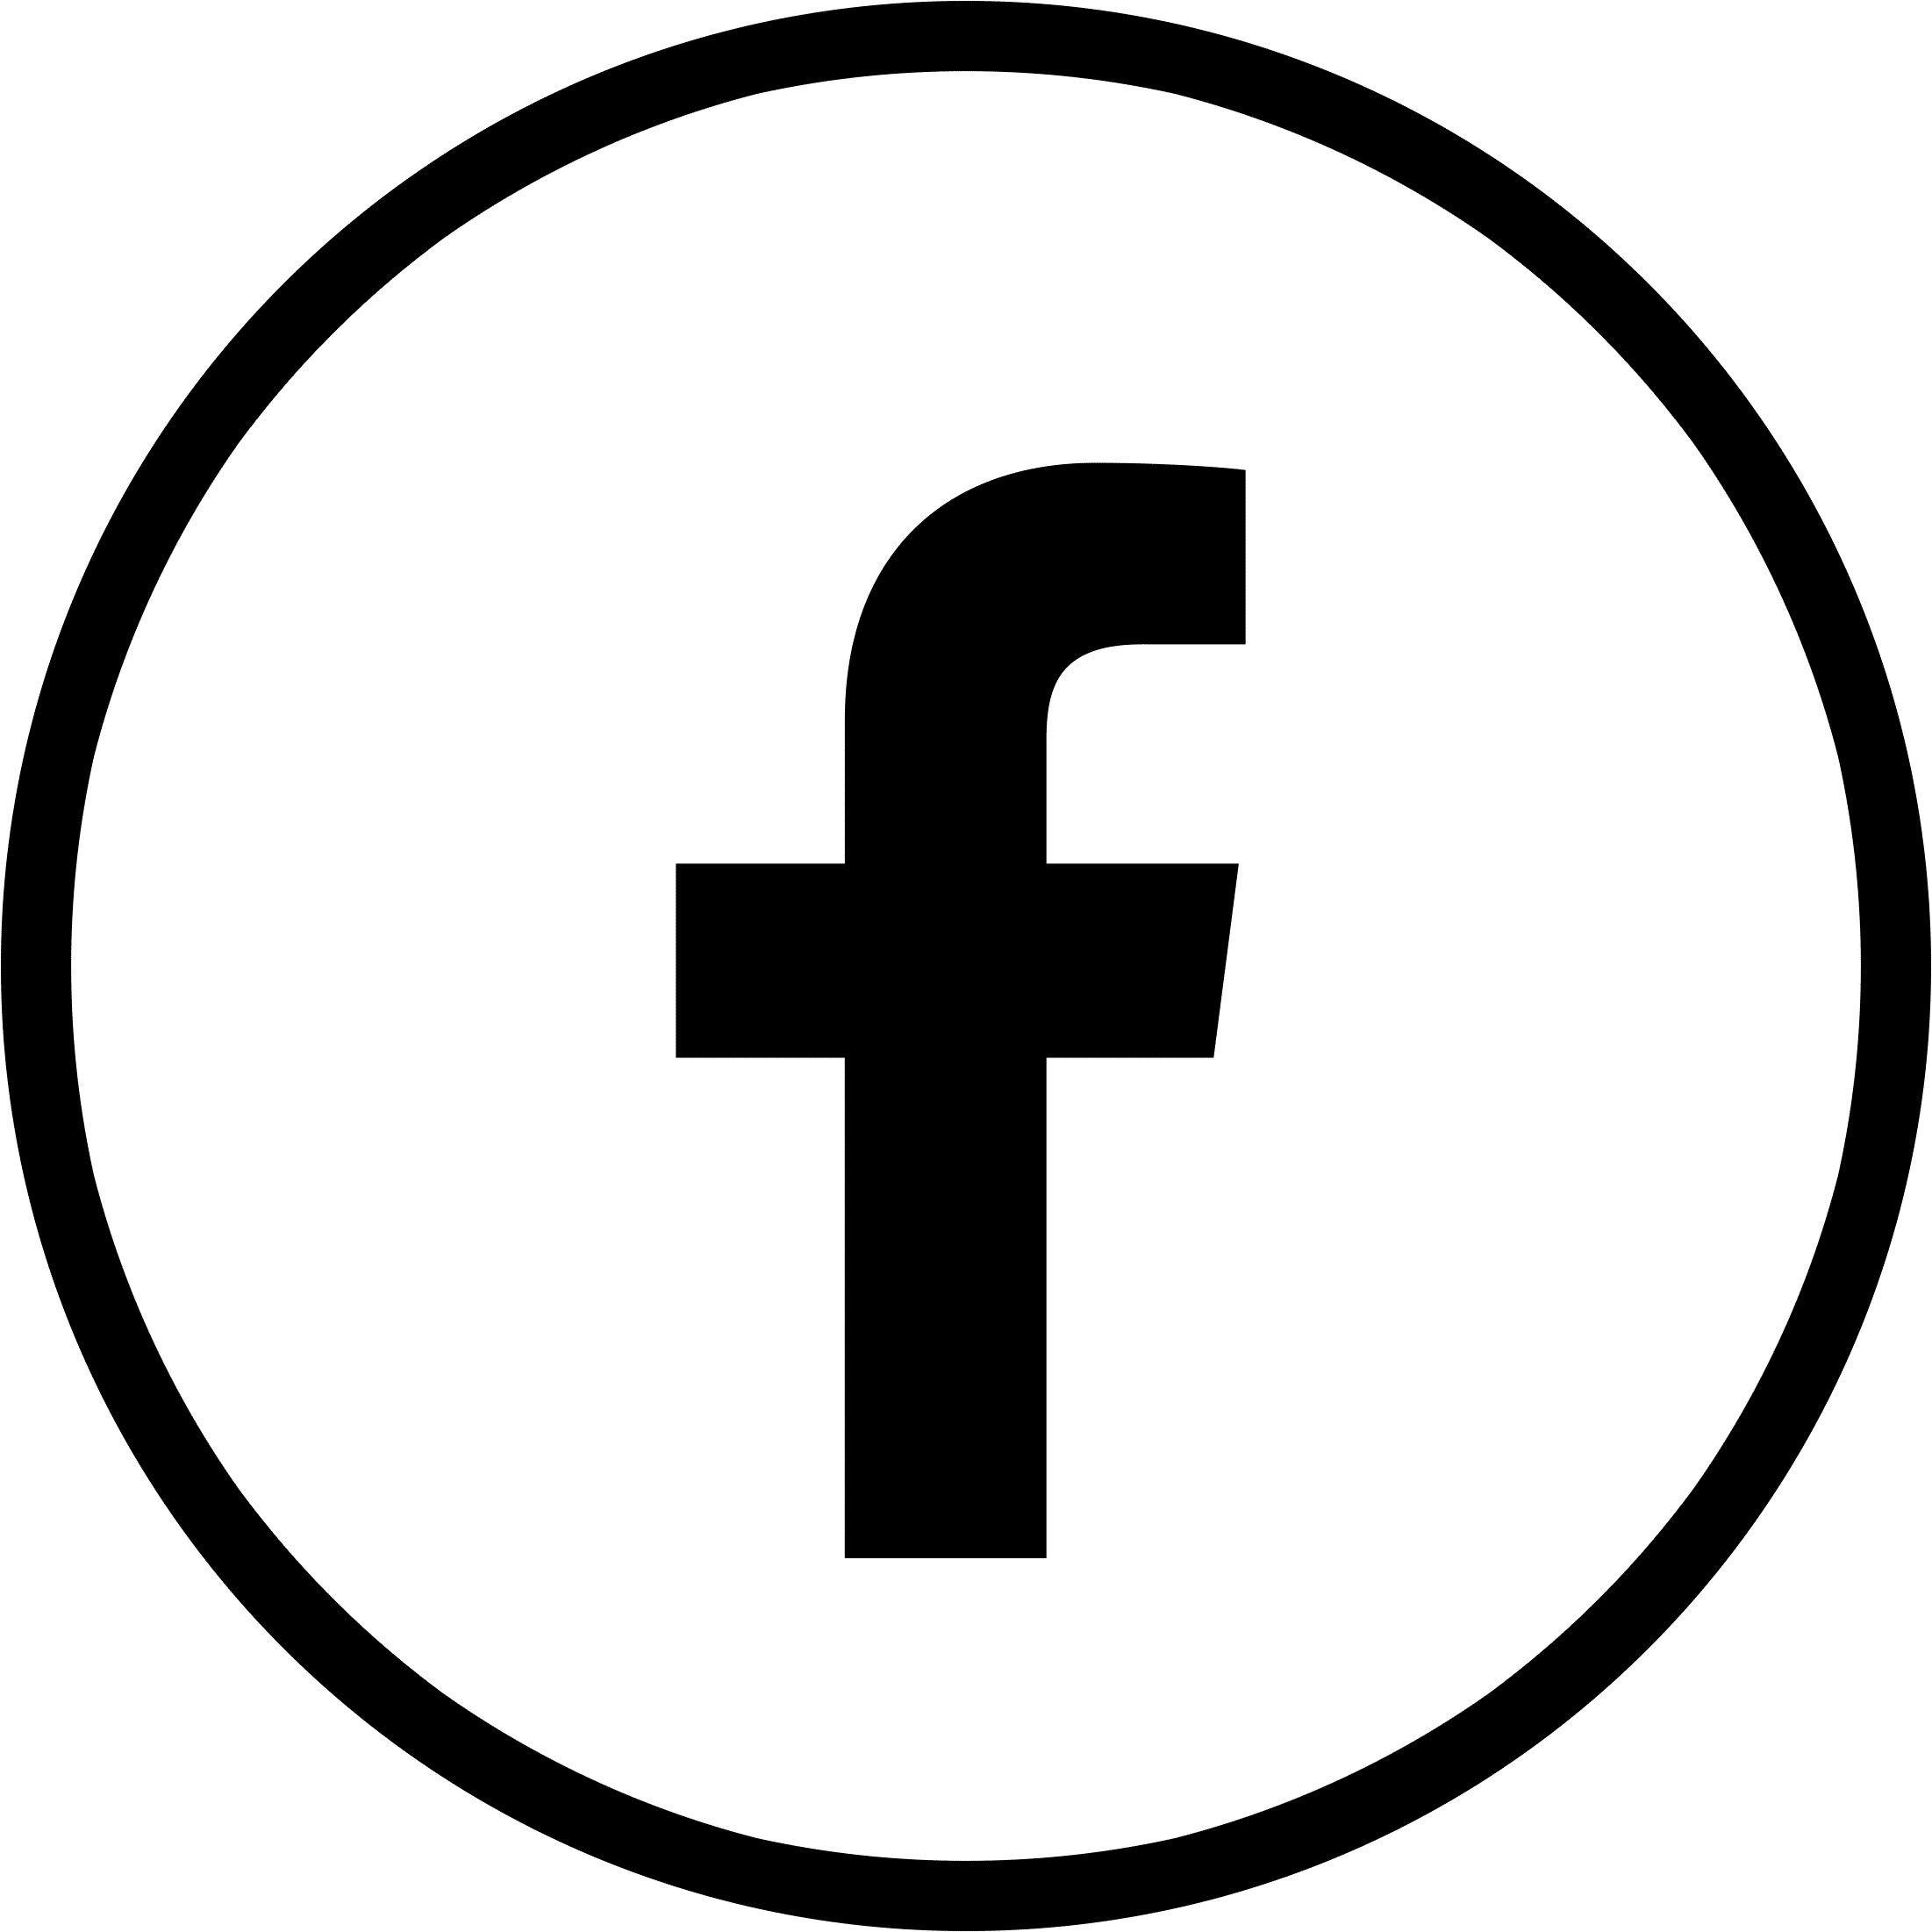 Logotipo do Facebook PNG Image